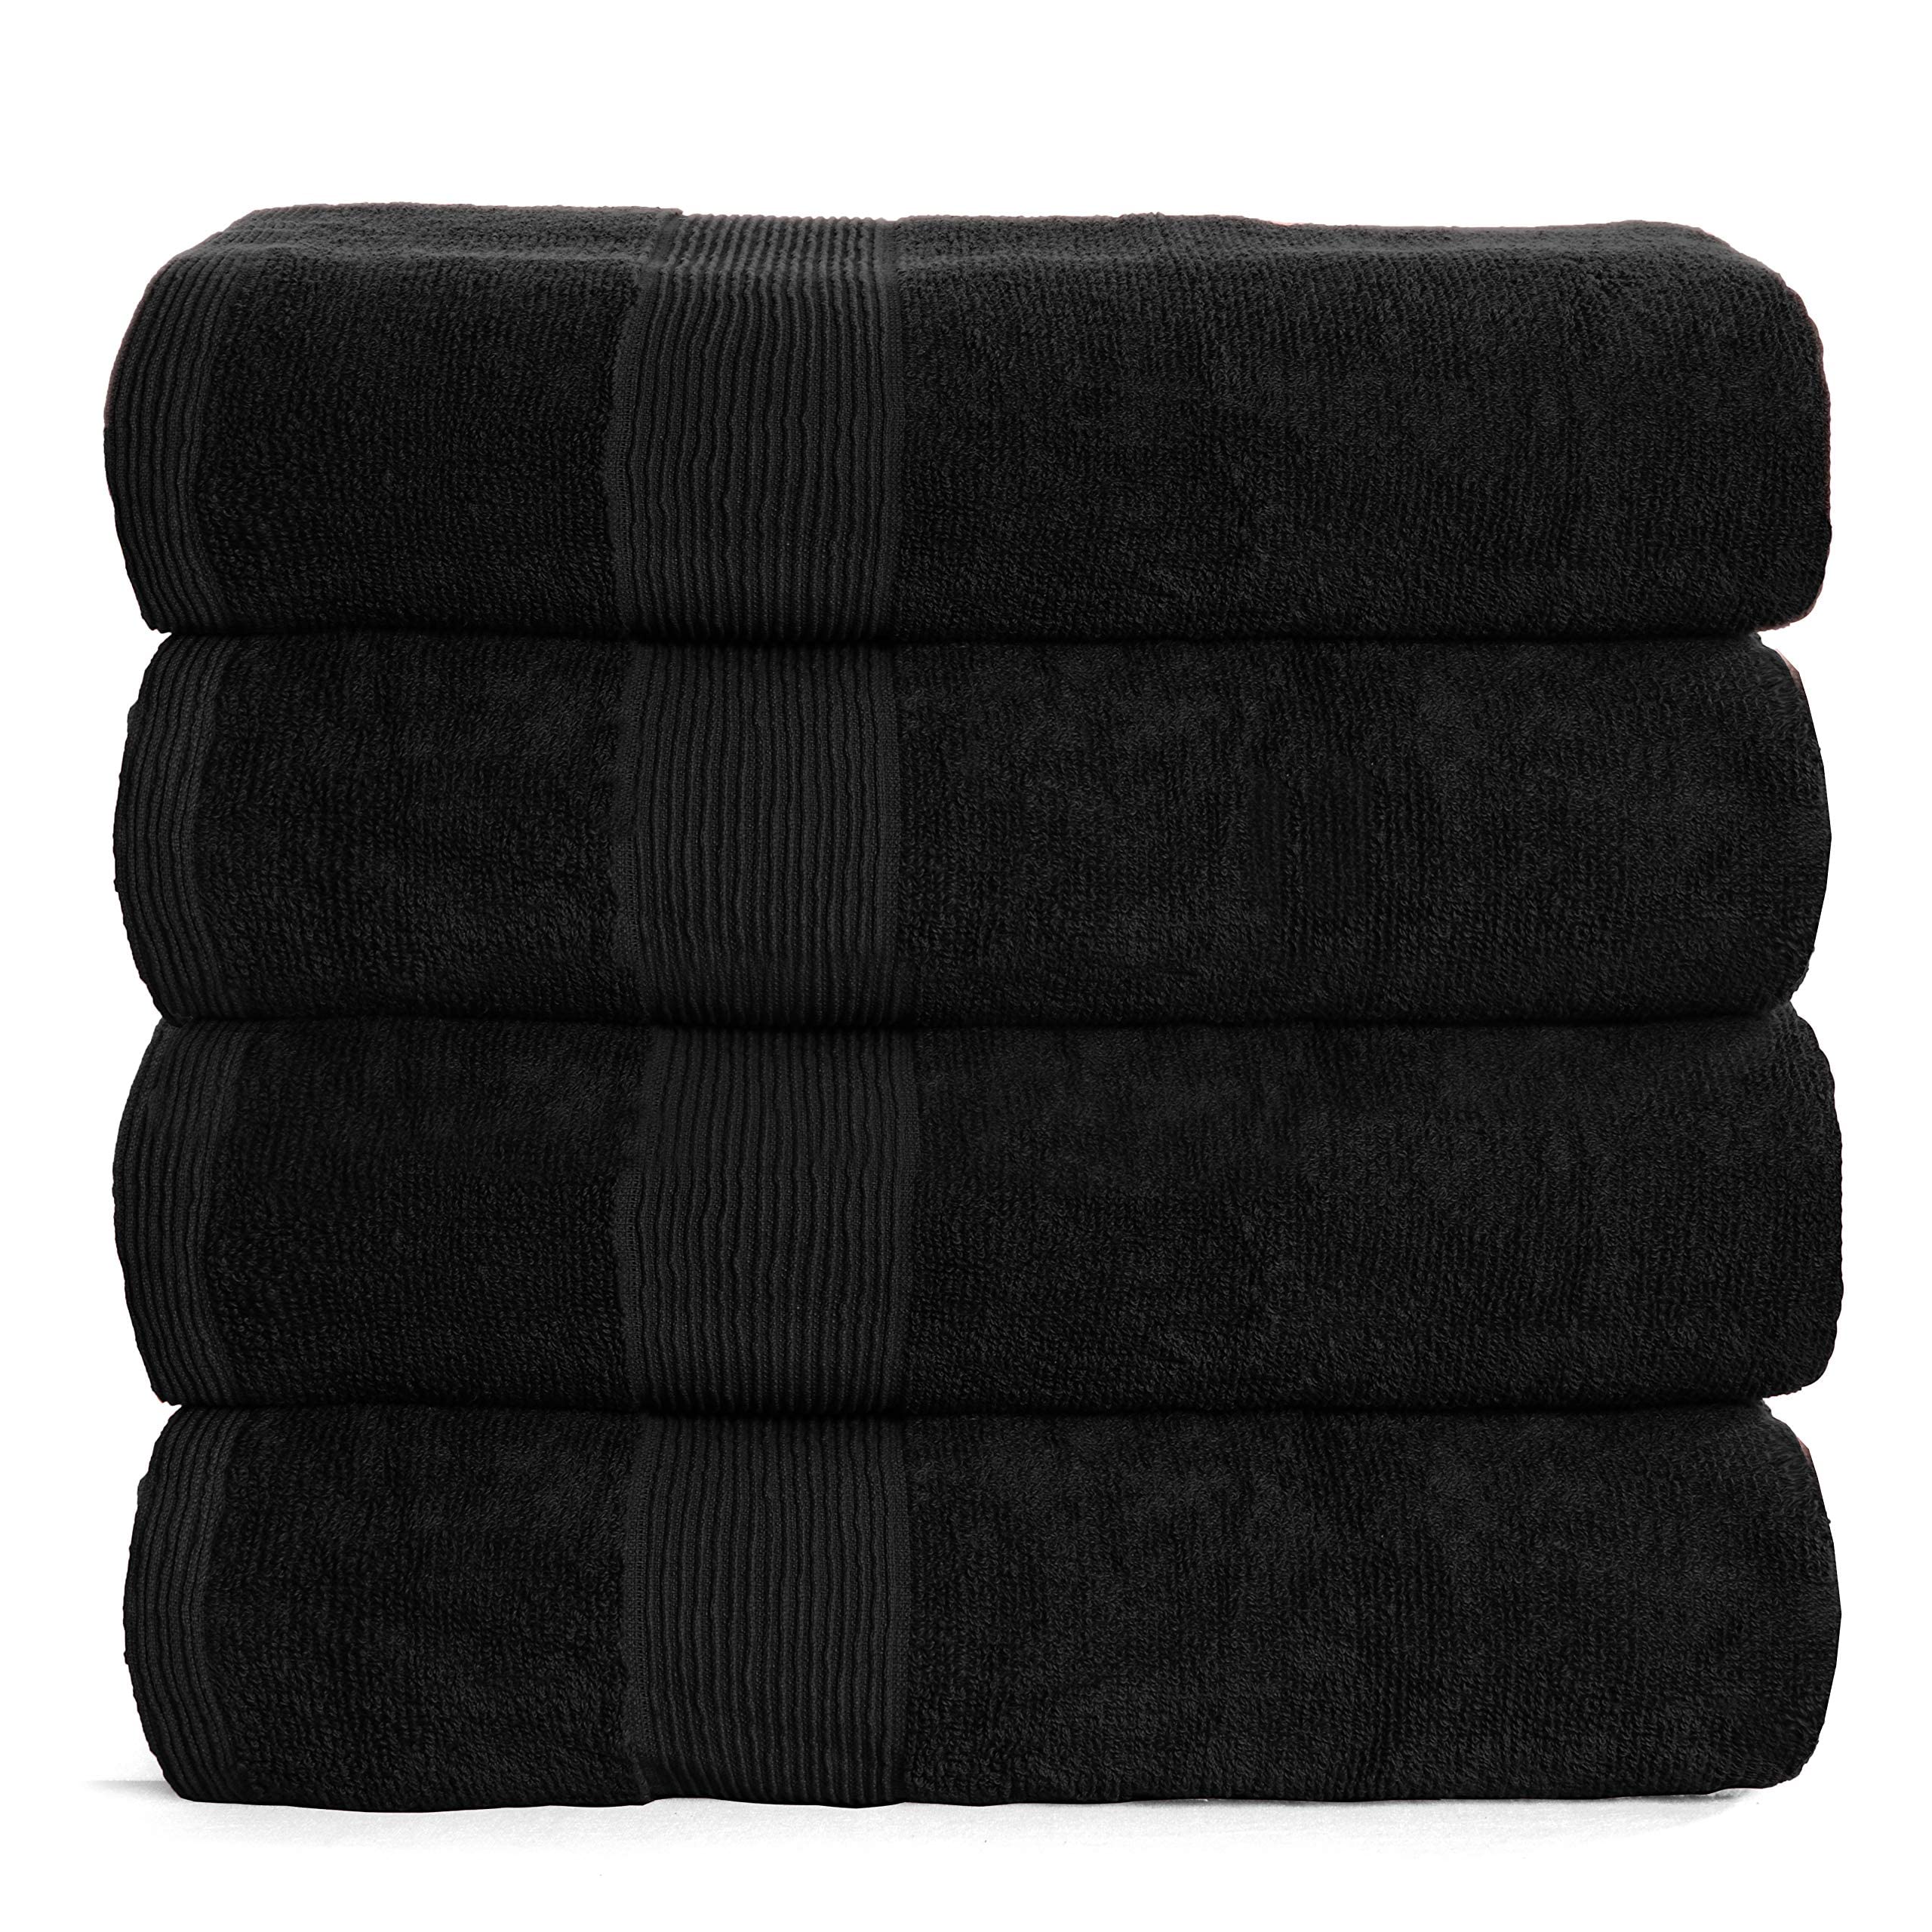 4 X Extra Large Bath Towels Sheet 27x54 100% Ring Span Cotton